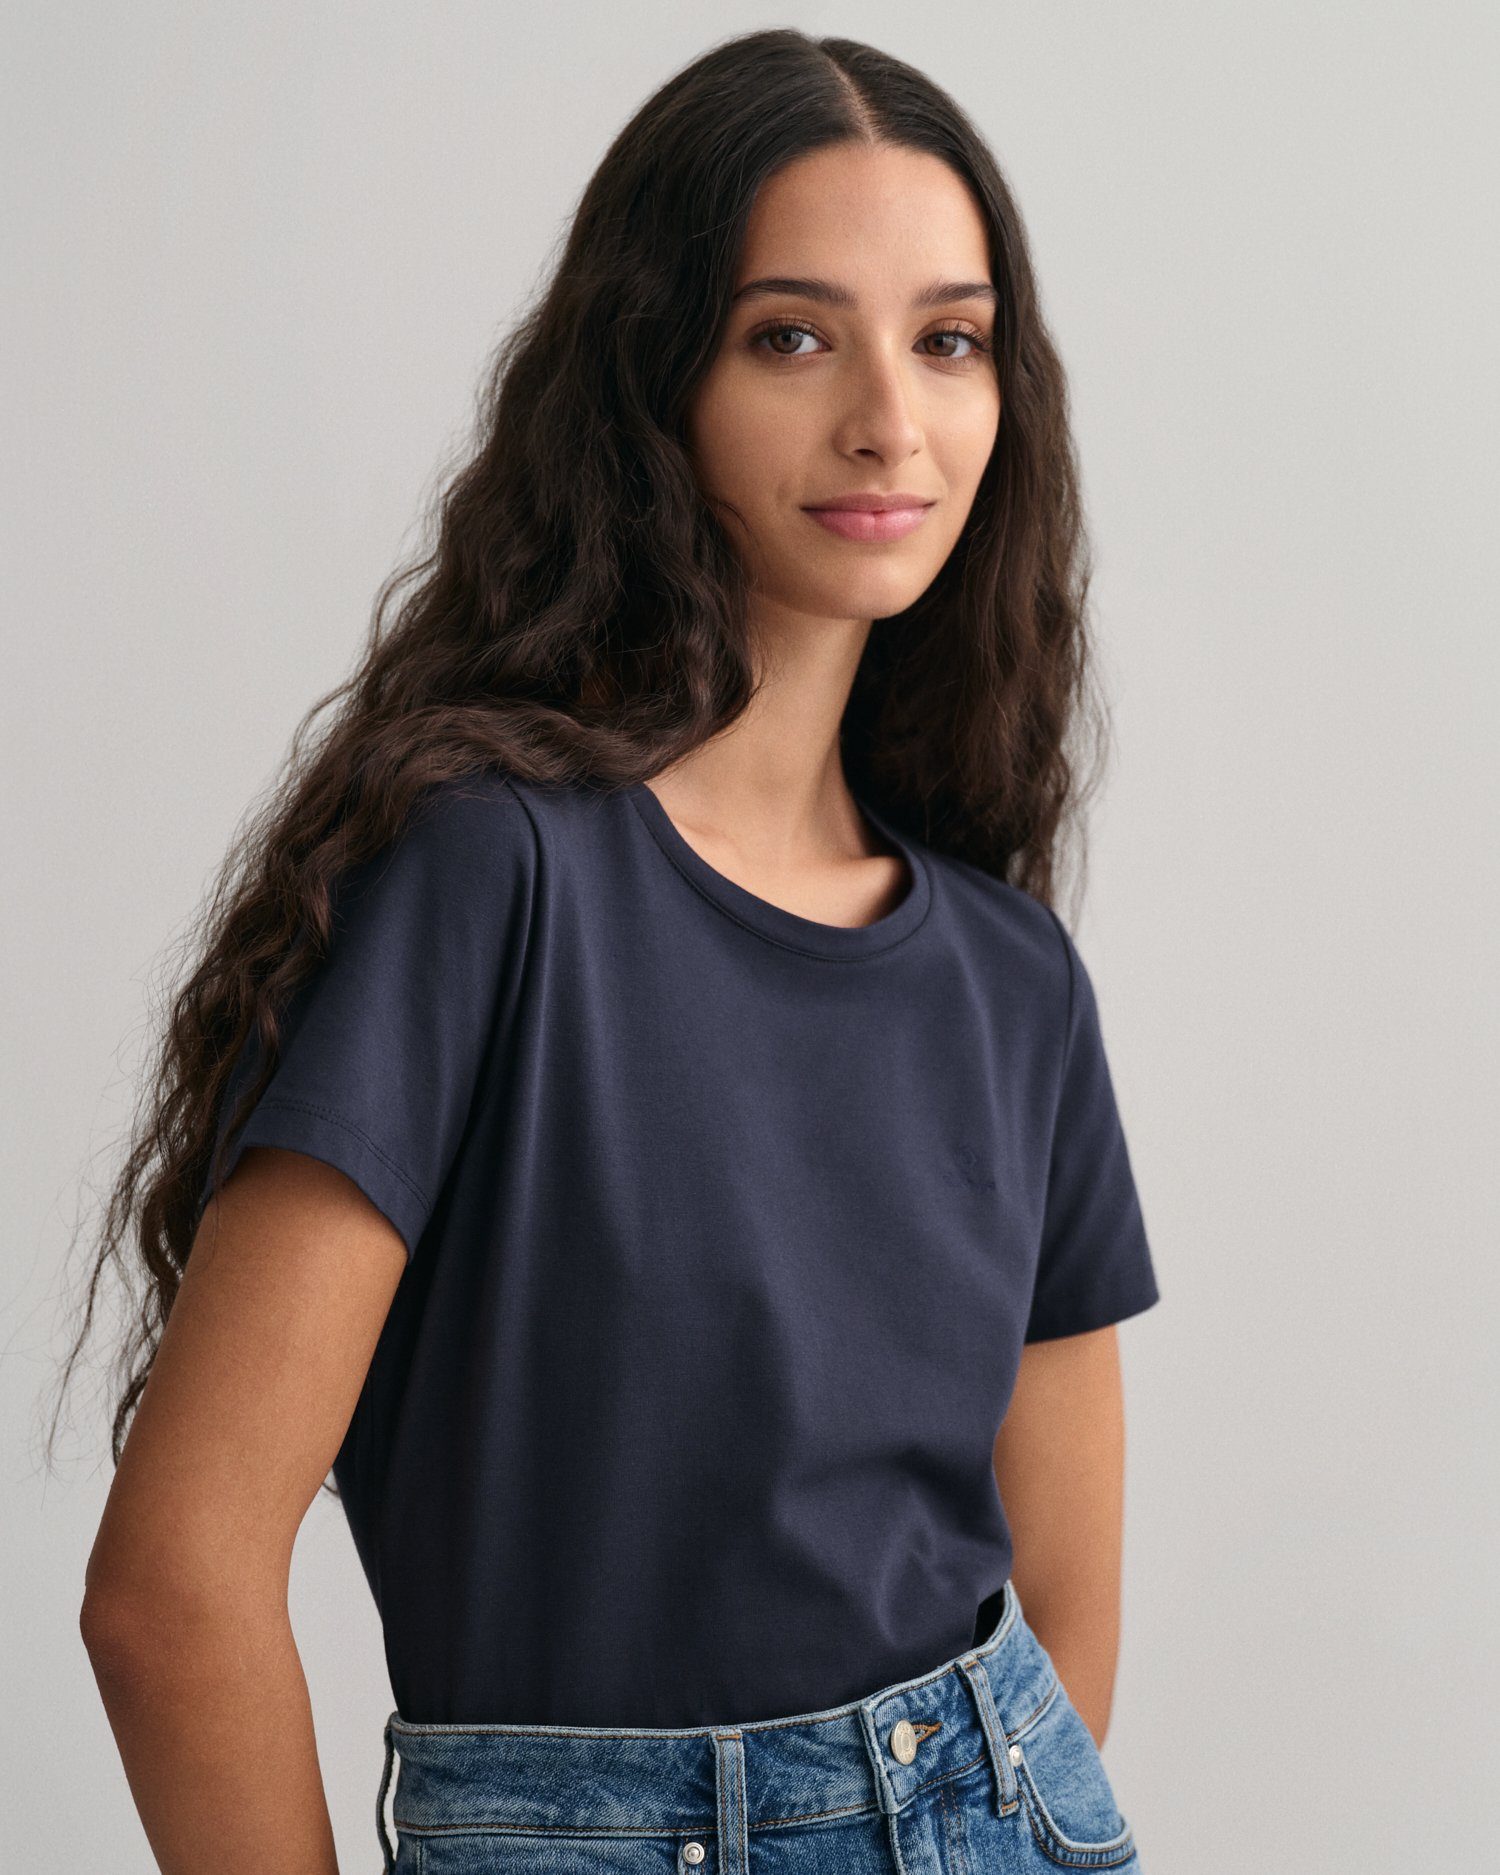 Gant Blau Top Stretch-Baumwolle T-Shirt aus